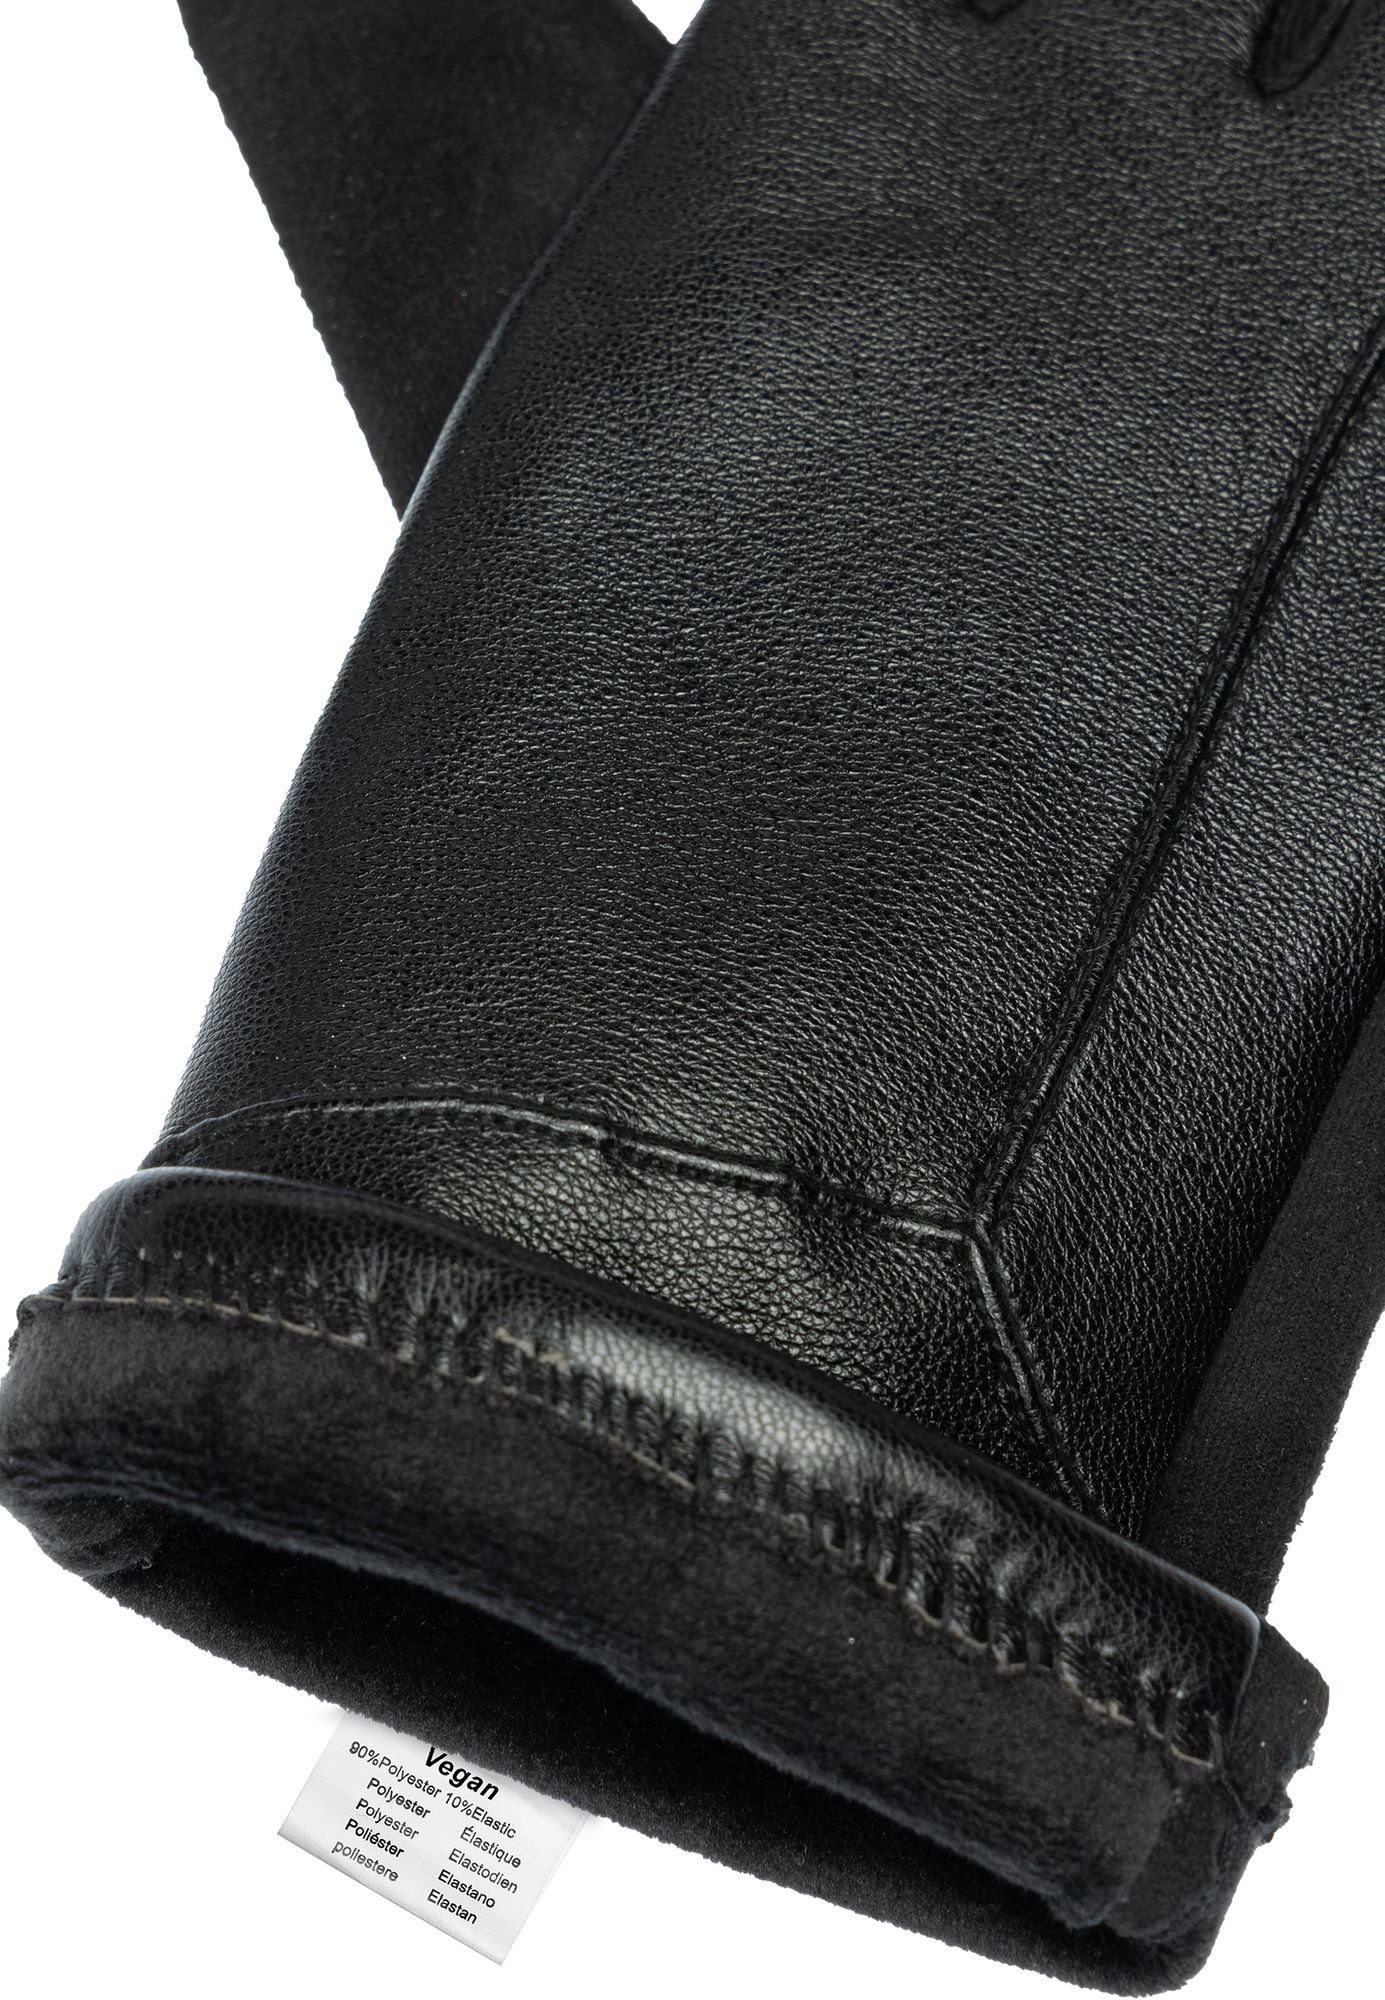 GLV015 uni schwarz Strickhandschuhe elegante klassisch Damen Handschuhe Caspar